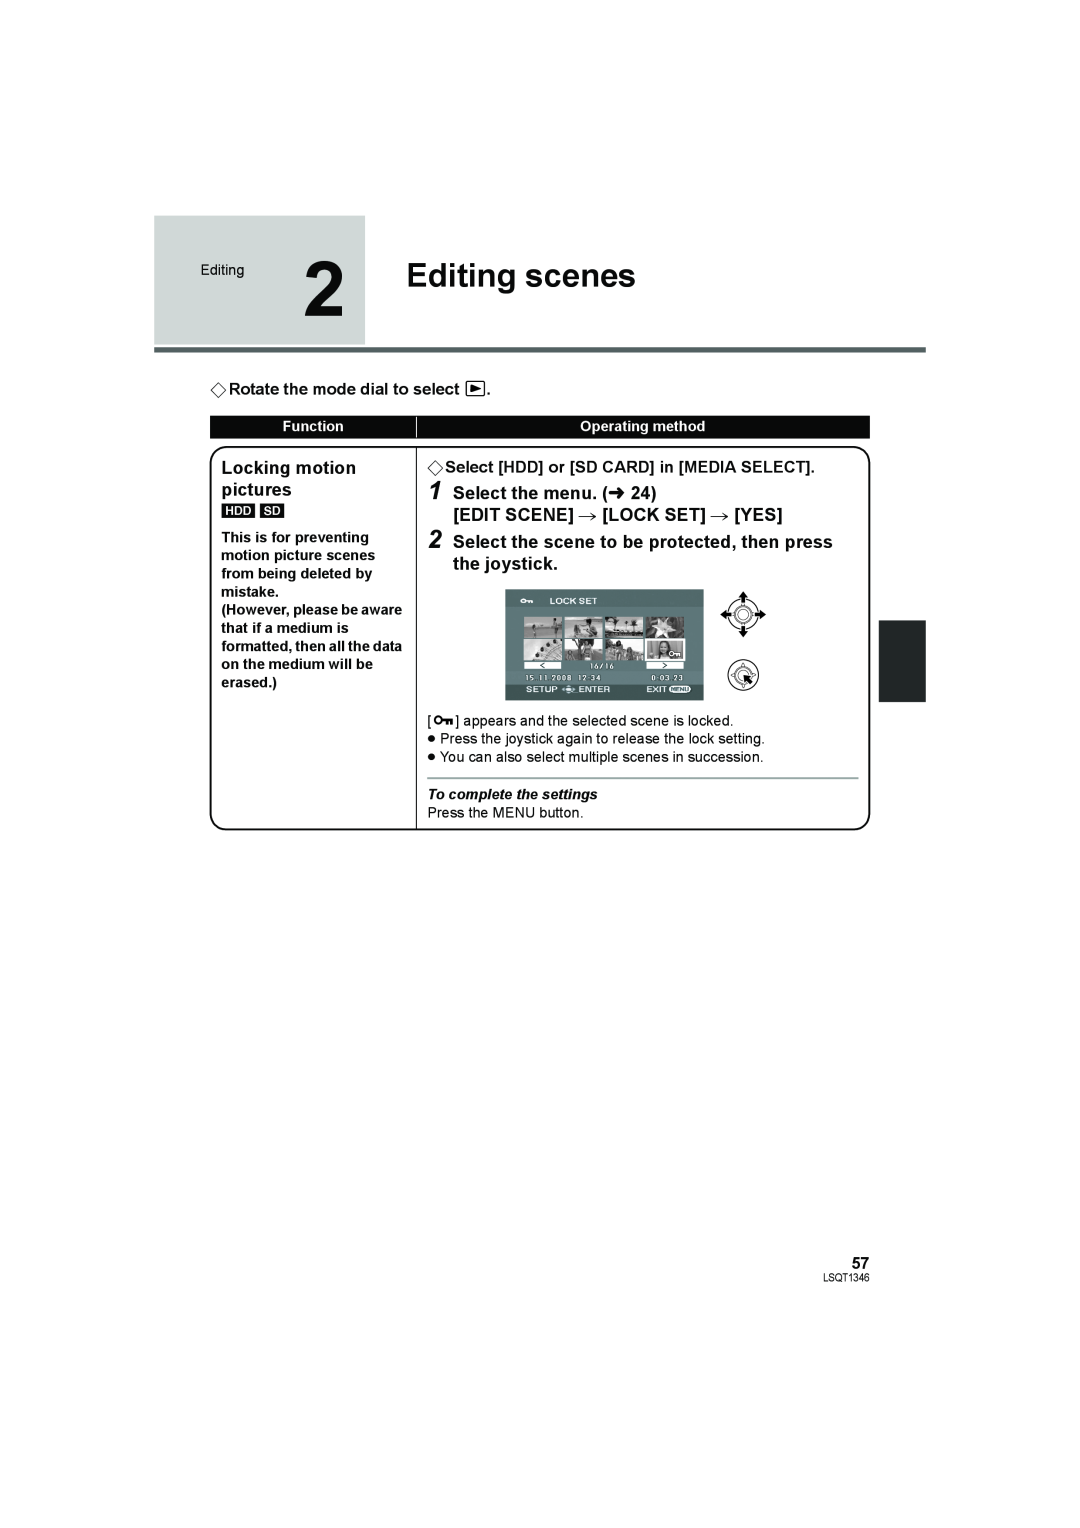 Panasonic SDR-H50 Editing scenes, Locking motion pictures, Select the menu. l EDIT SCENE # LOCK SET # YES, Function 